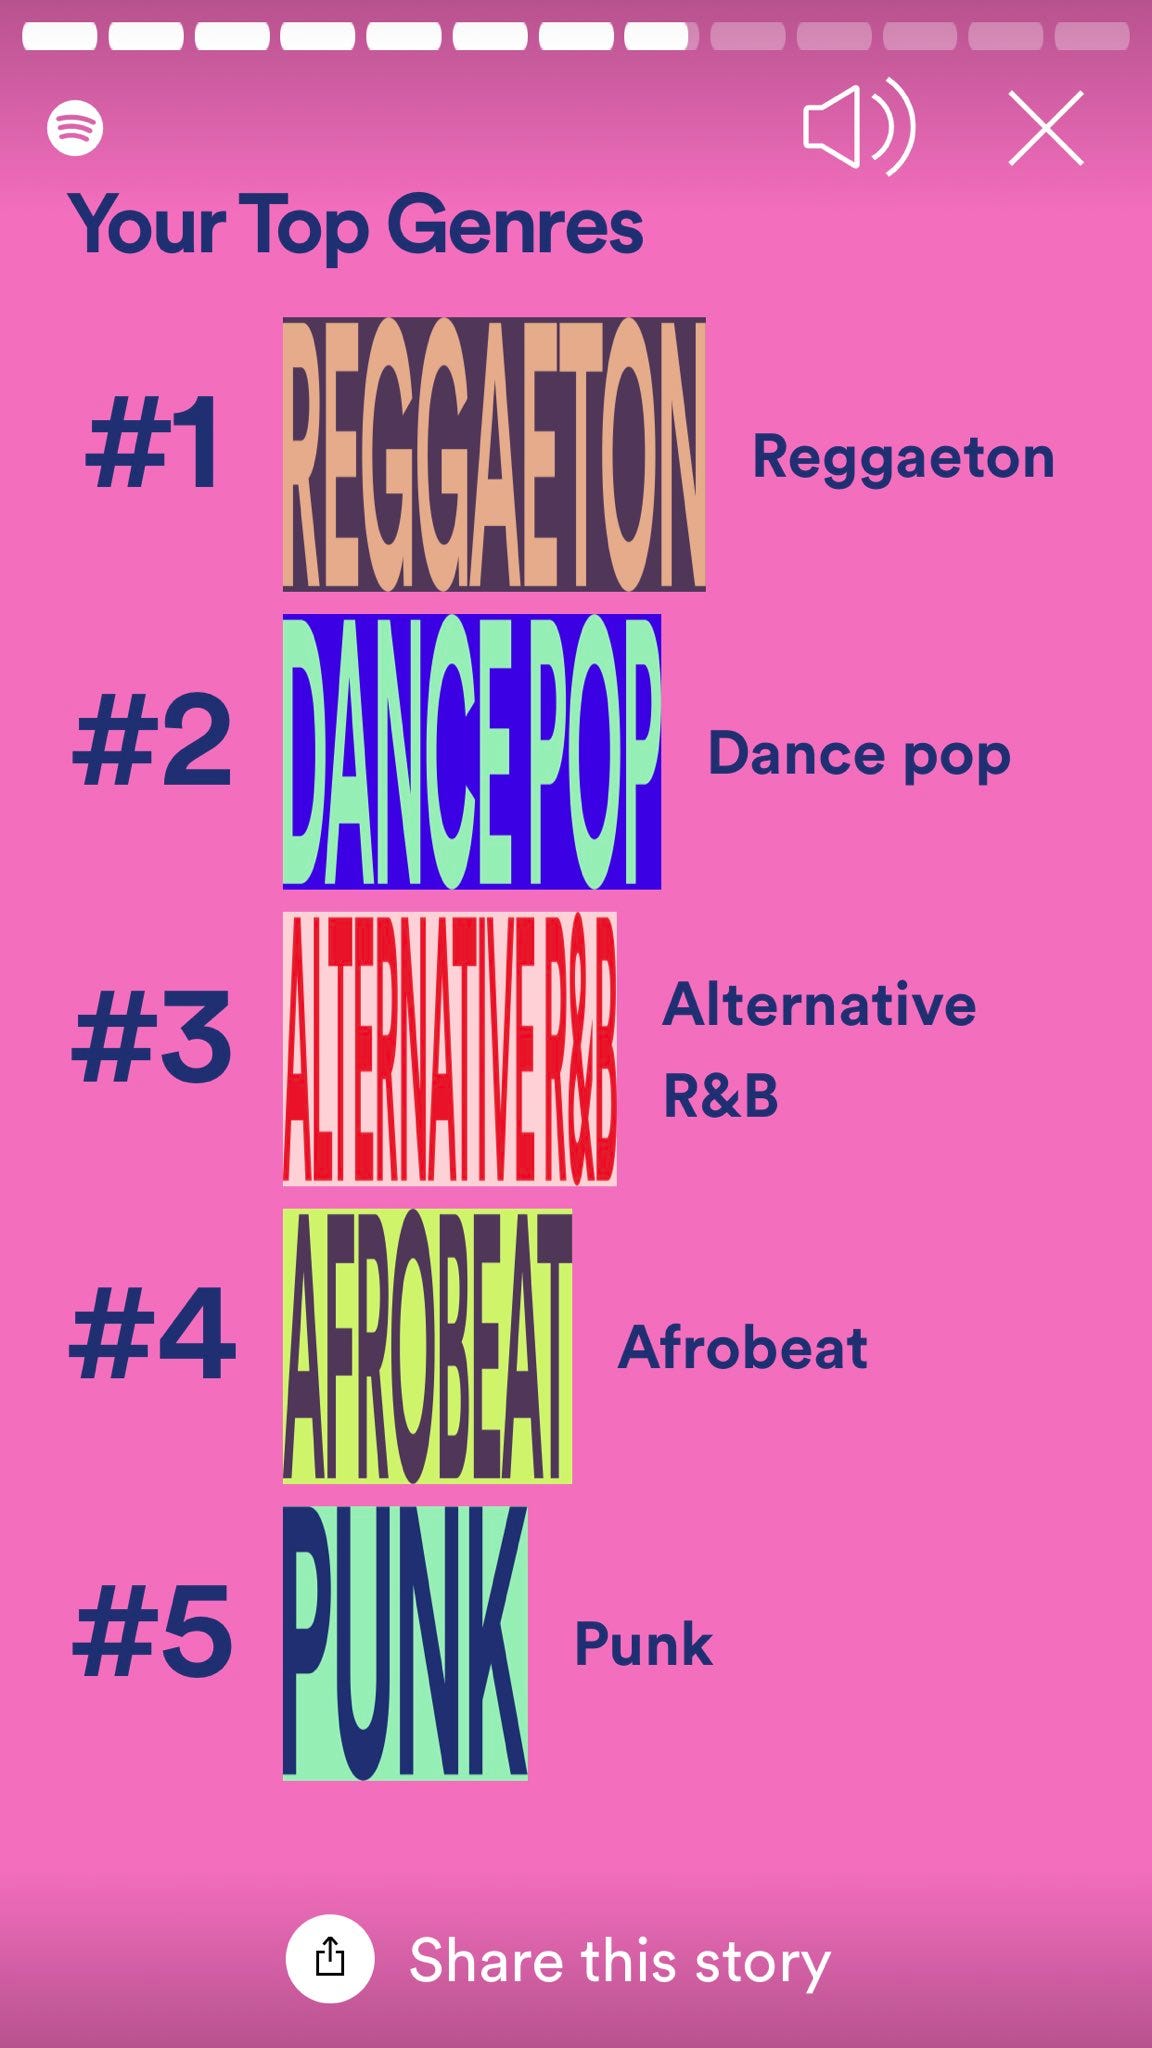 Top genres listed: 1. Reggaeton 2. Dance Pop 3. Alternative R&B 4. Afrobeat 5. Punk🤘